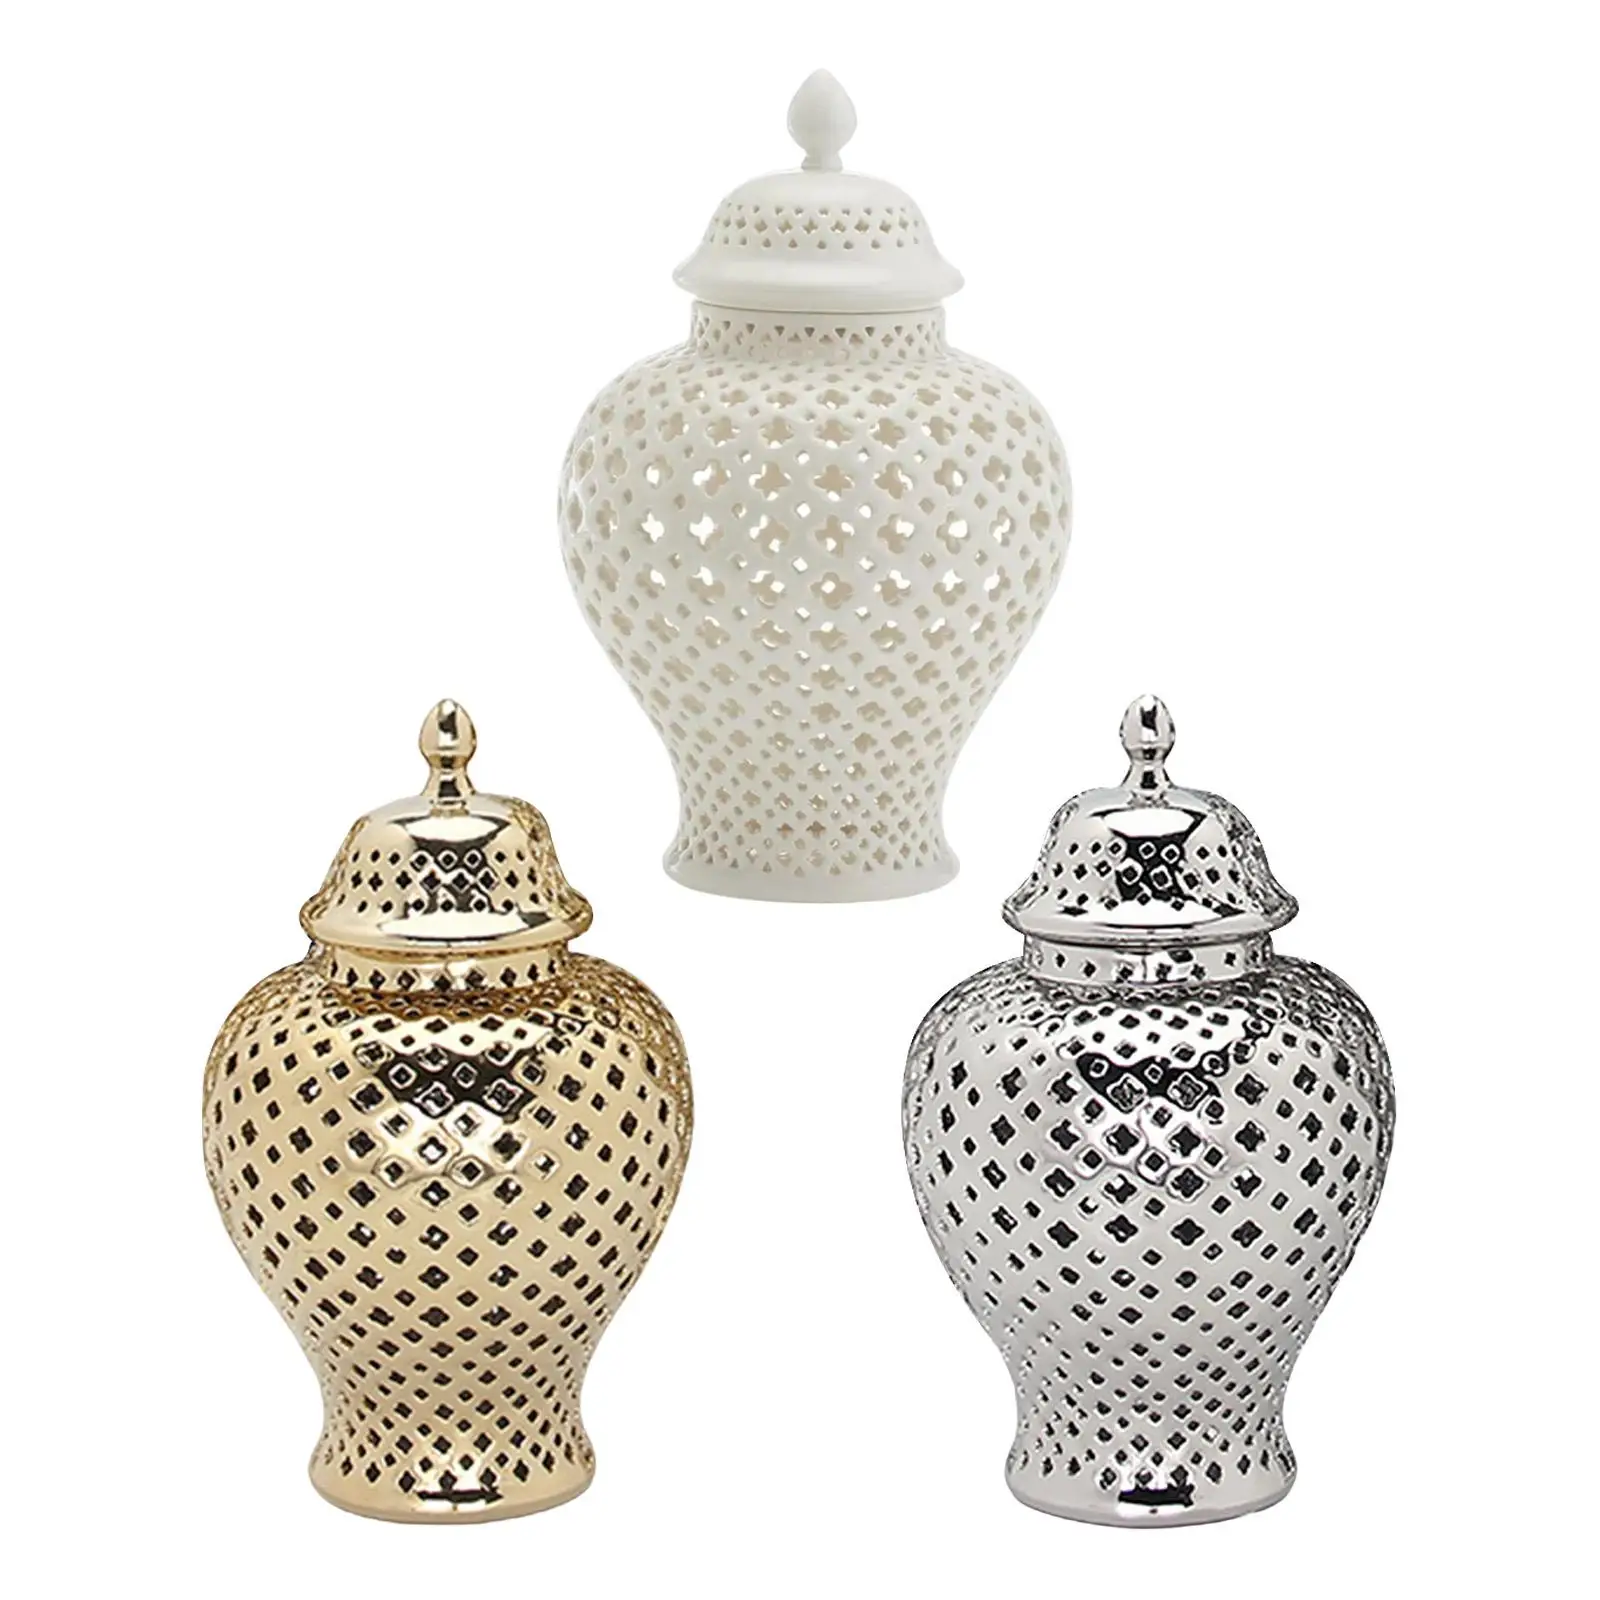 Light Luxury Ceramic Ginger Jar Ornaments Storage Jars Crafts Carved Lattice Accessories for Living Room Home Gift Decoration